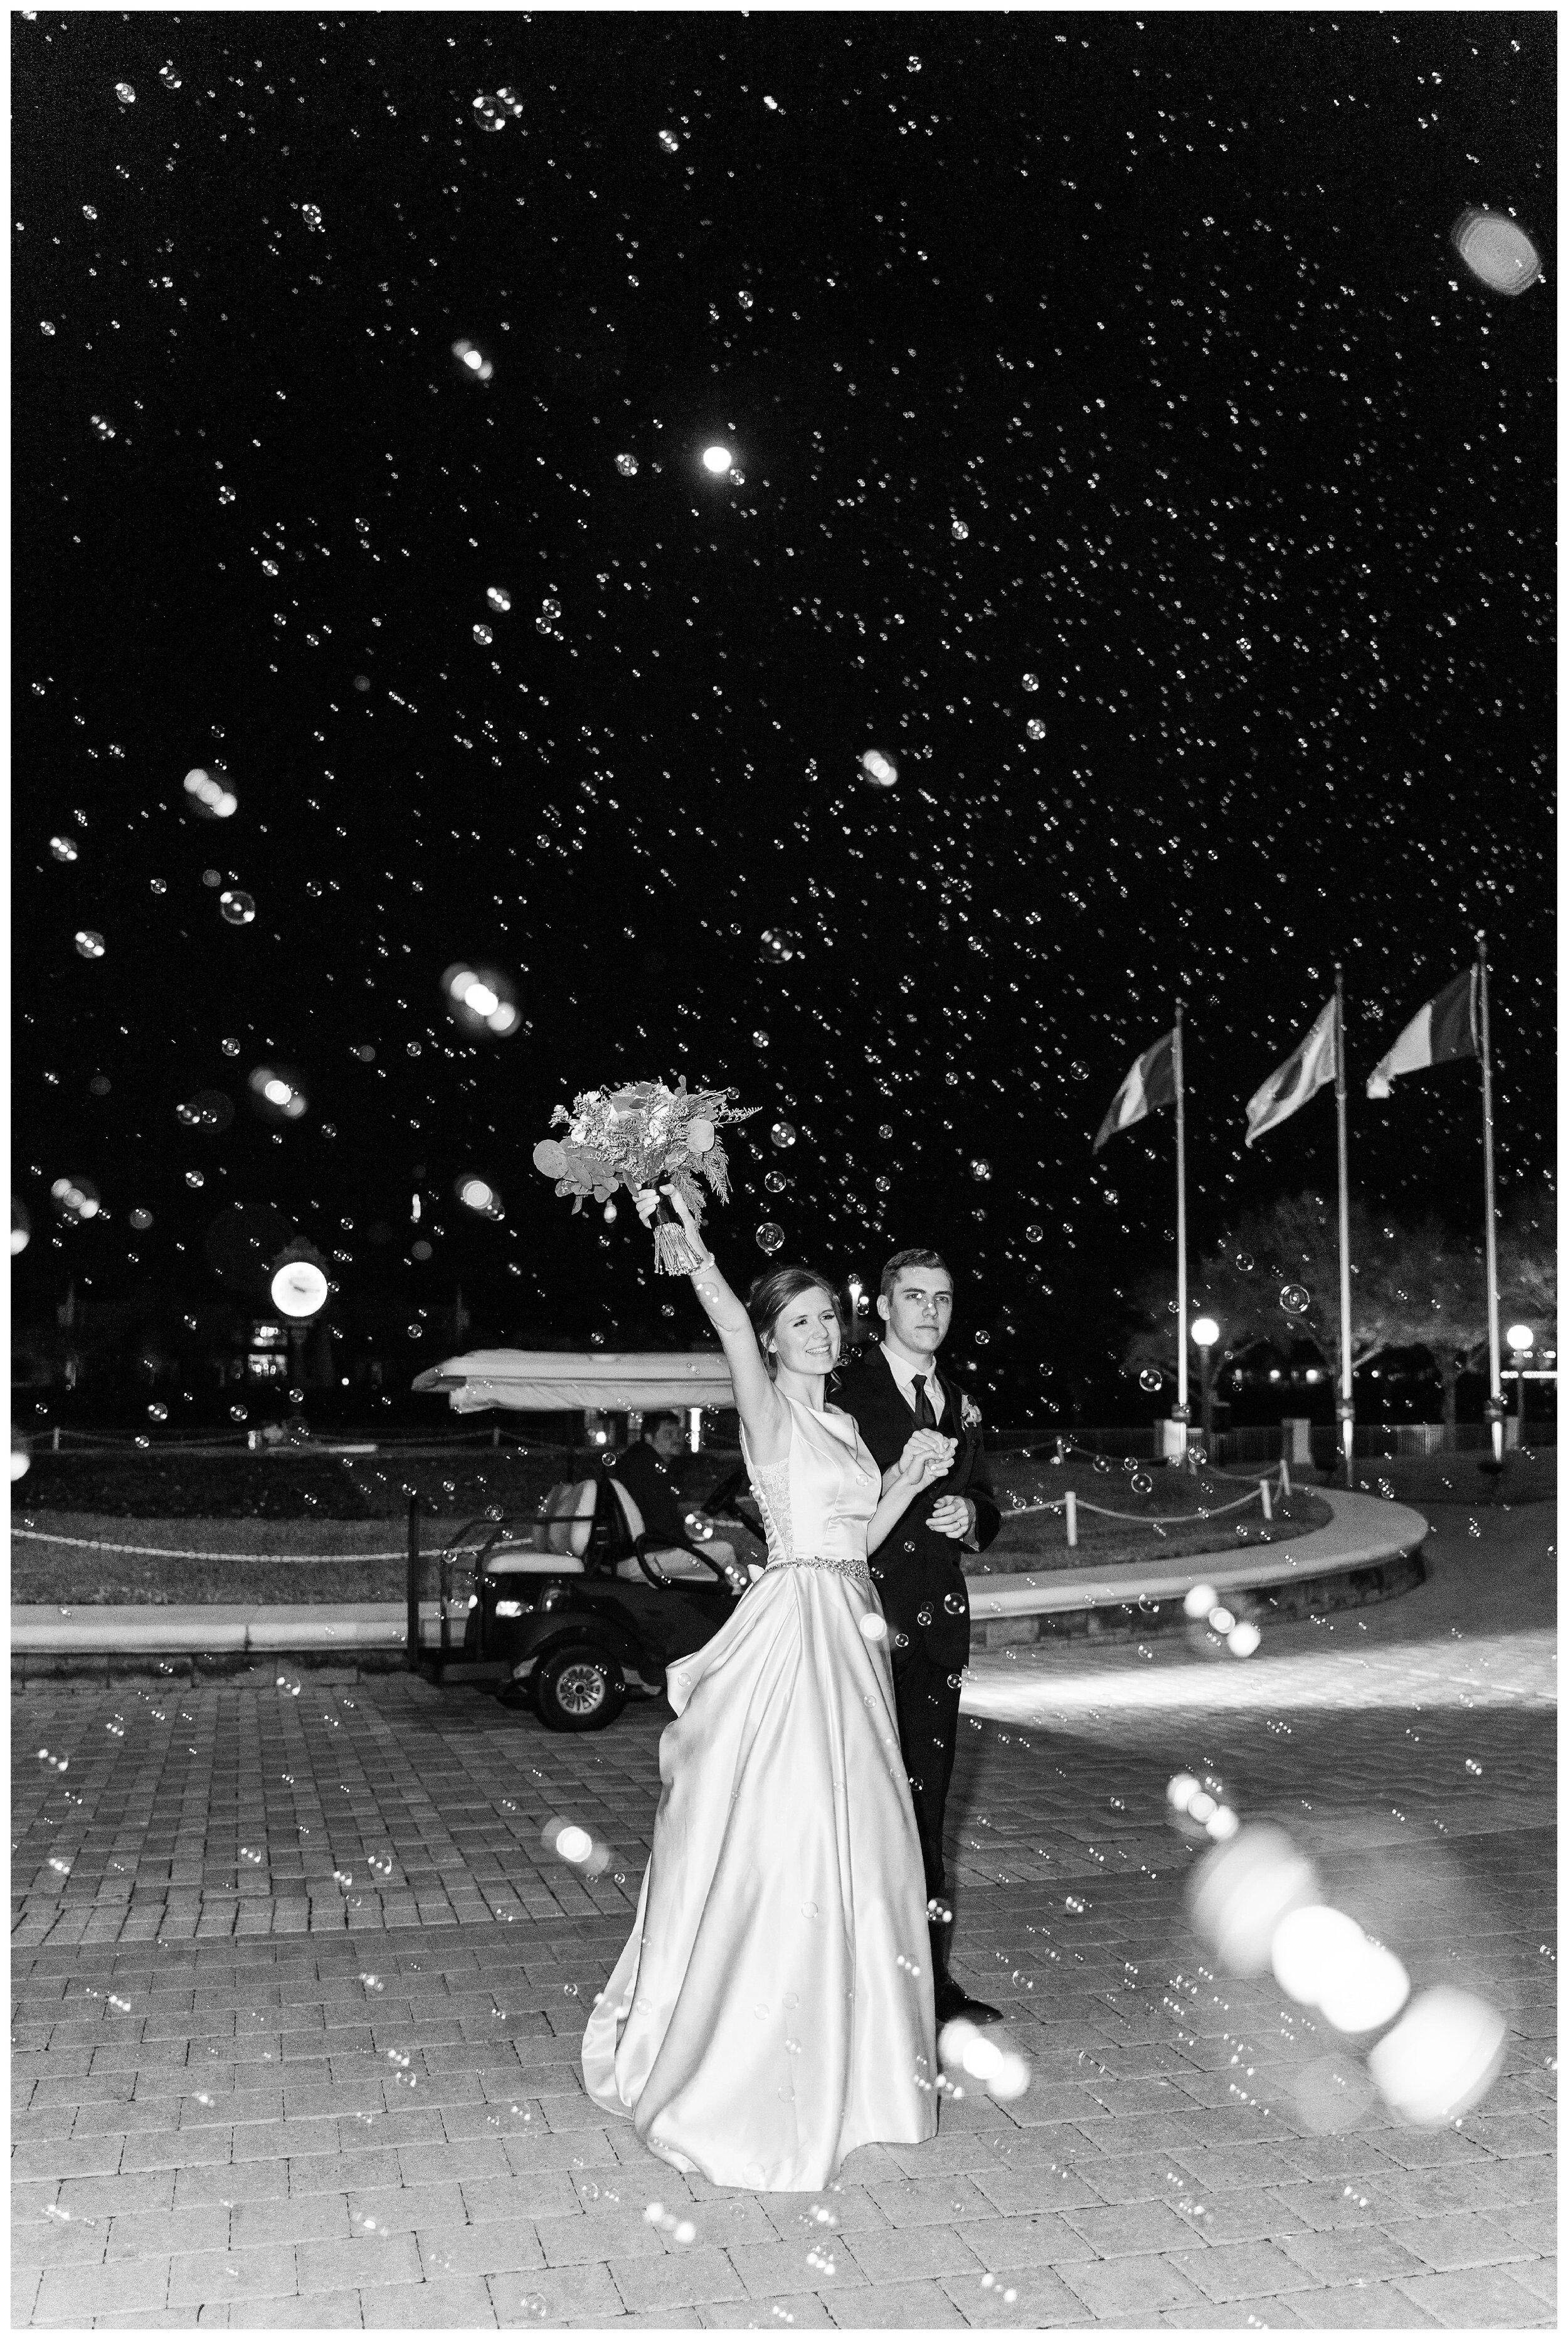 HALL OF FAME WORLD GOLF VILLAGE| ST. AUGUSTINE, FLORIDA HIGHSCHOOL SWEETHEARTS GET MARRIED ST.AUGUSTINE WEDDING